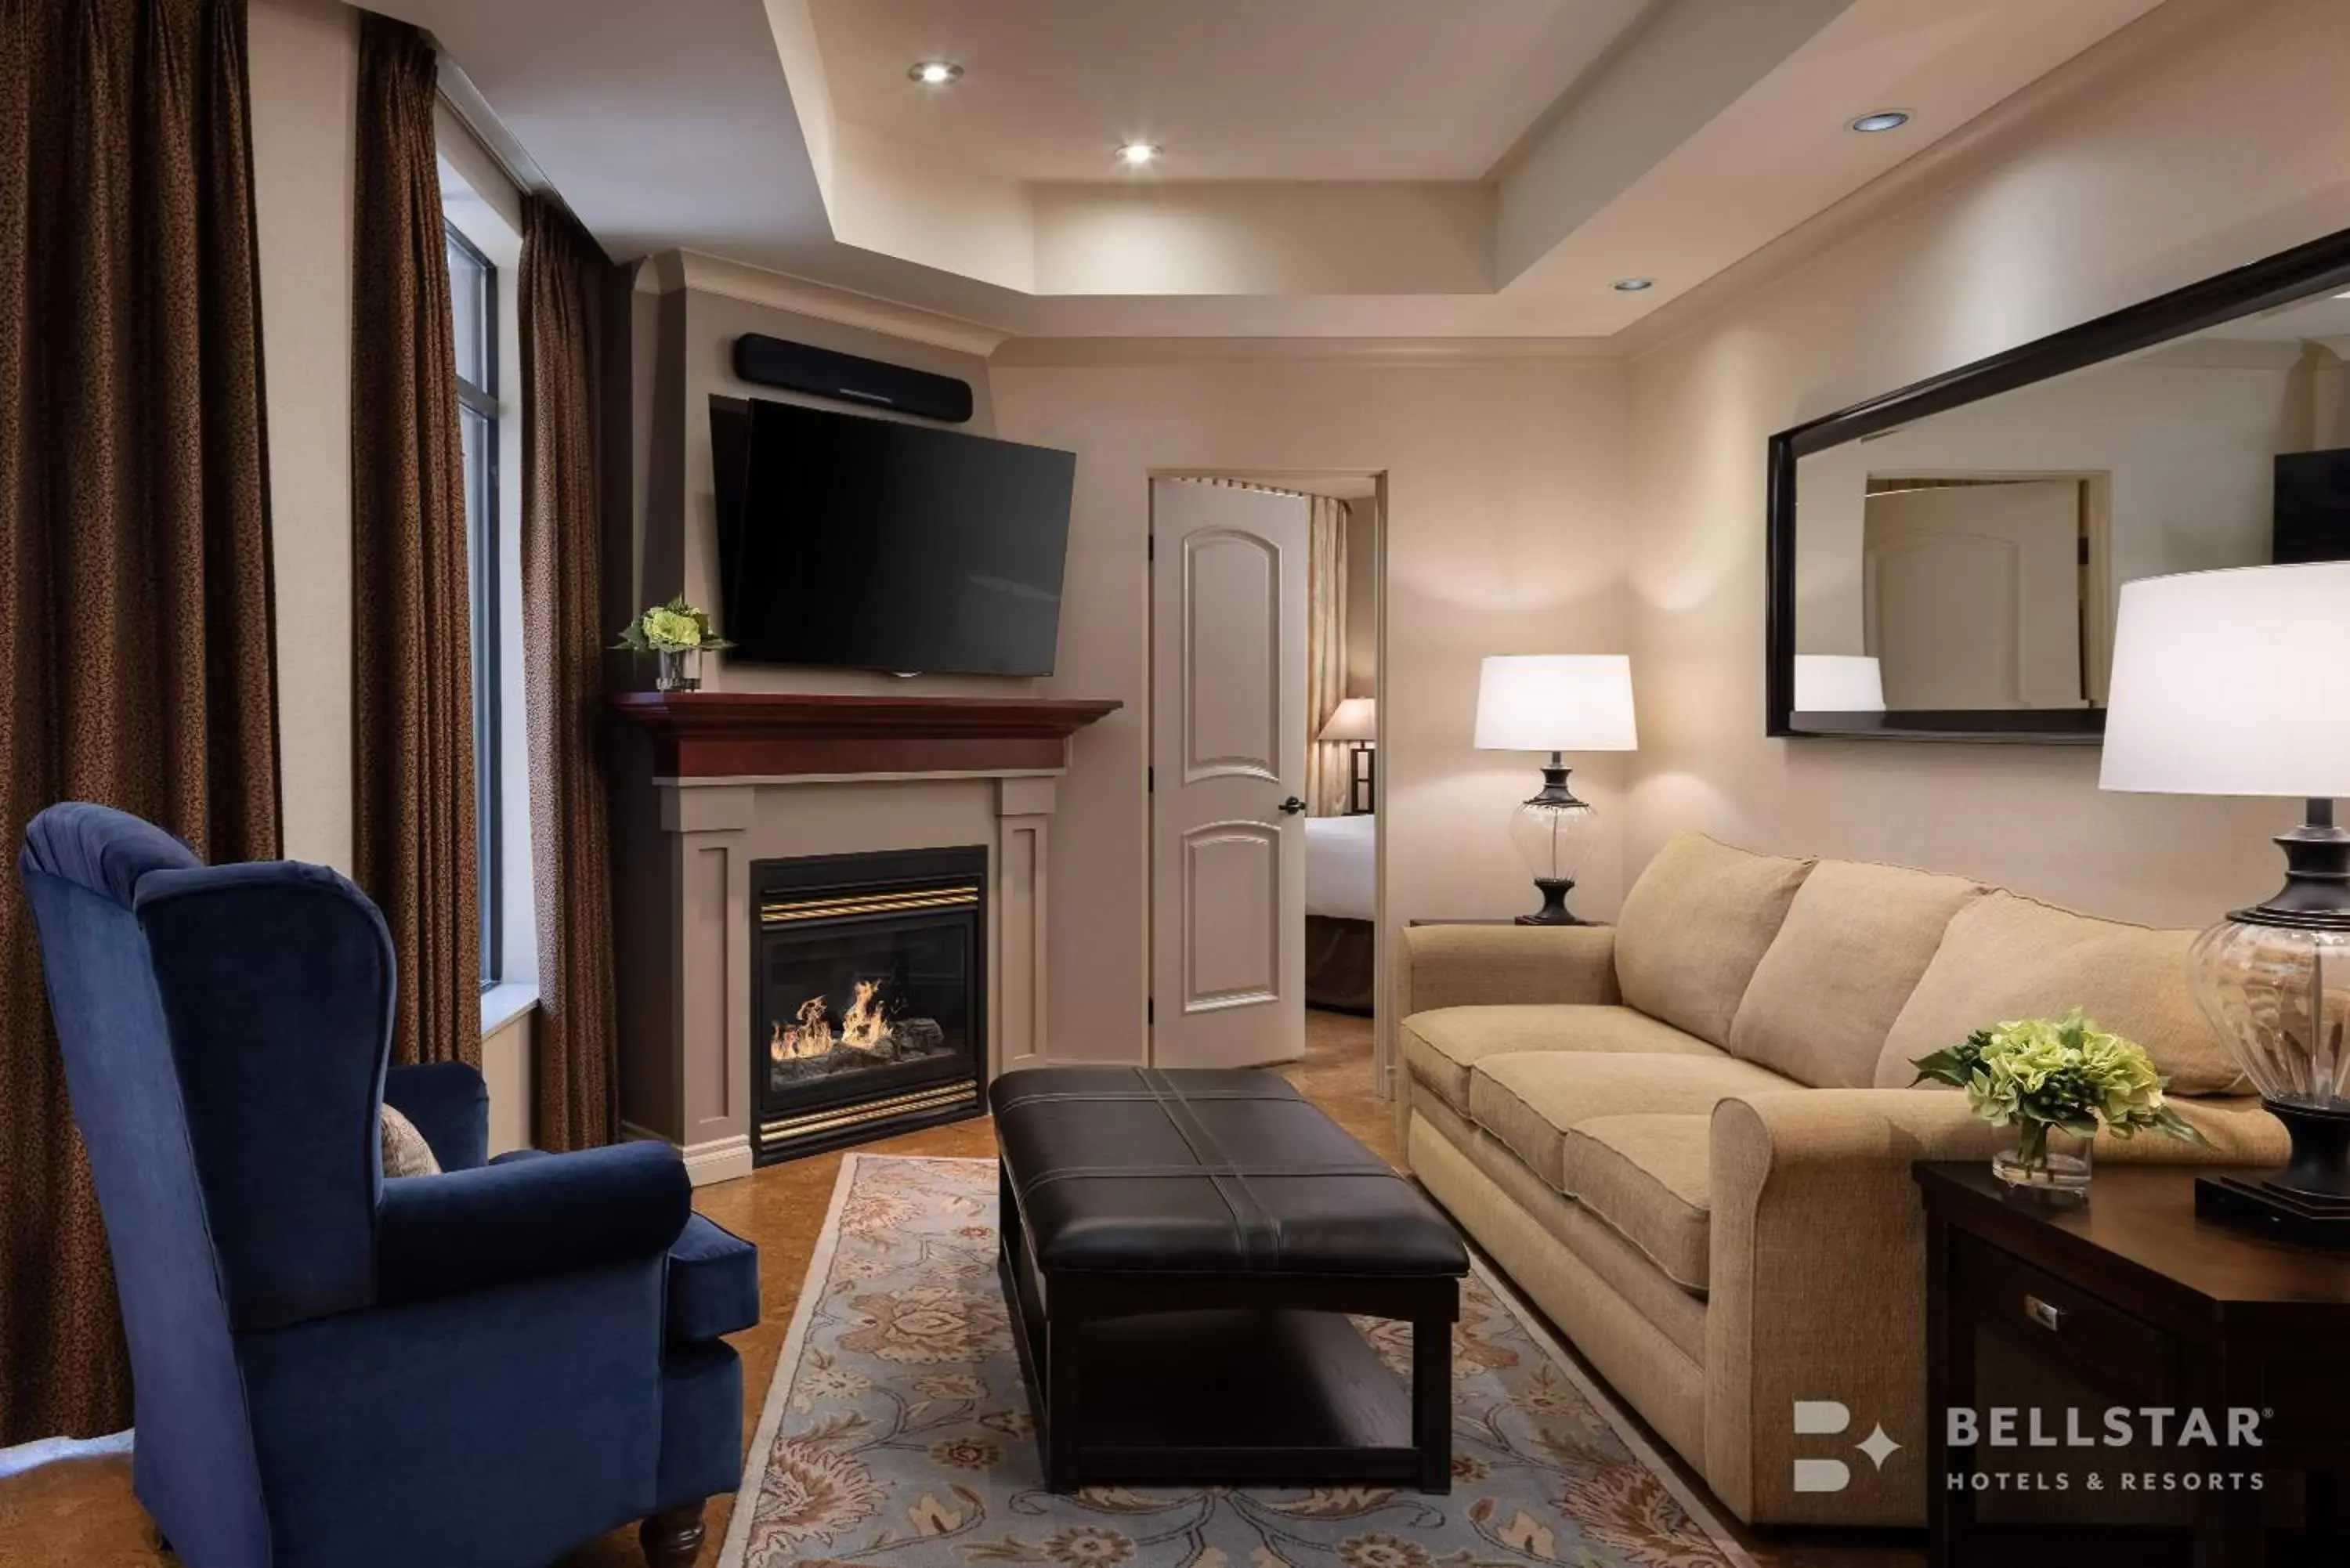 One-Bedroom Suite with Queen Bed in The Royal Kelowna - Bellstar Hotels & Resorts